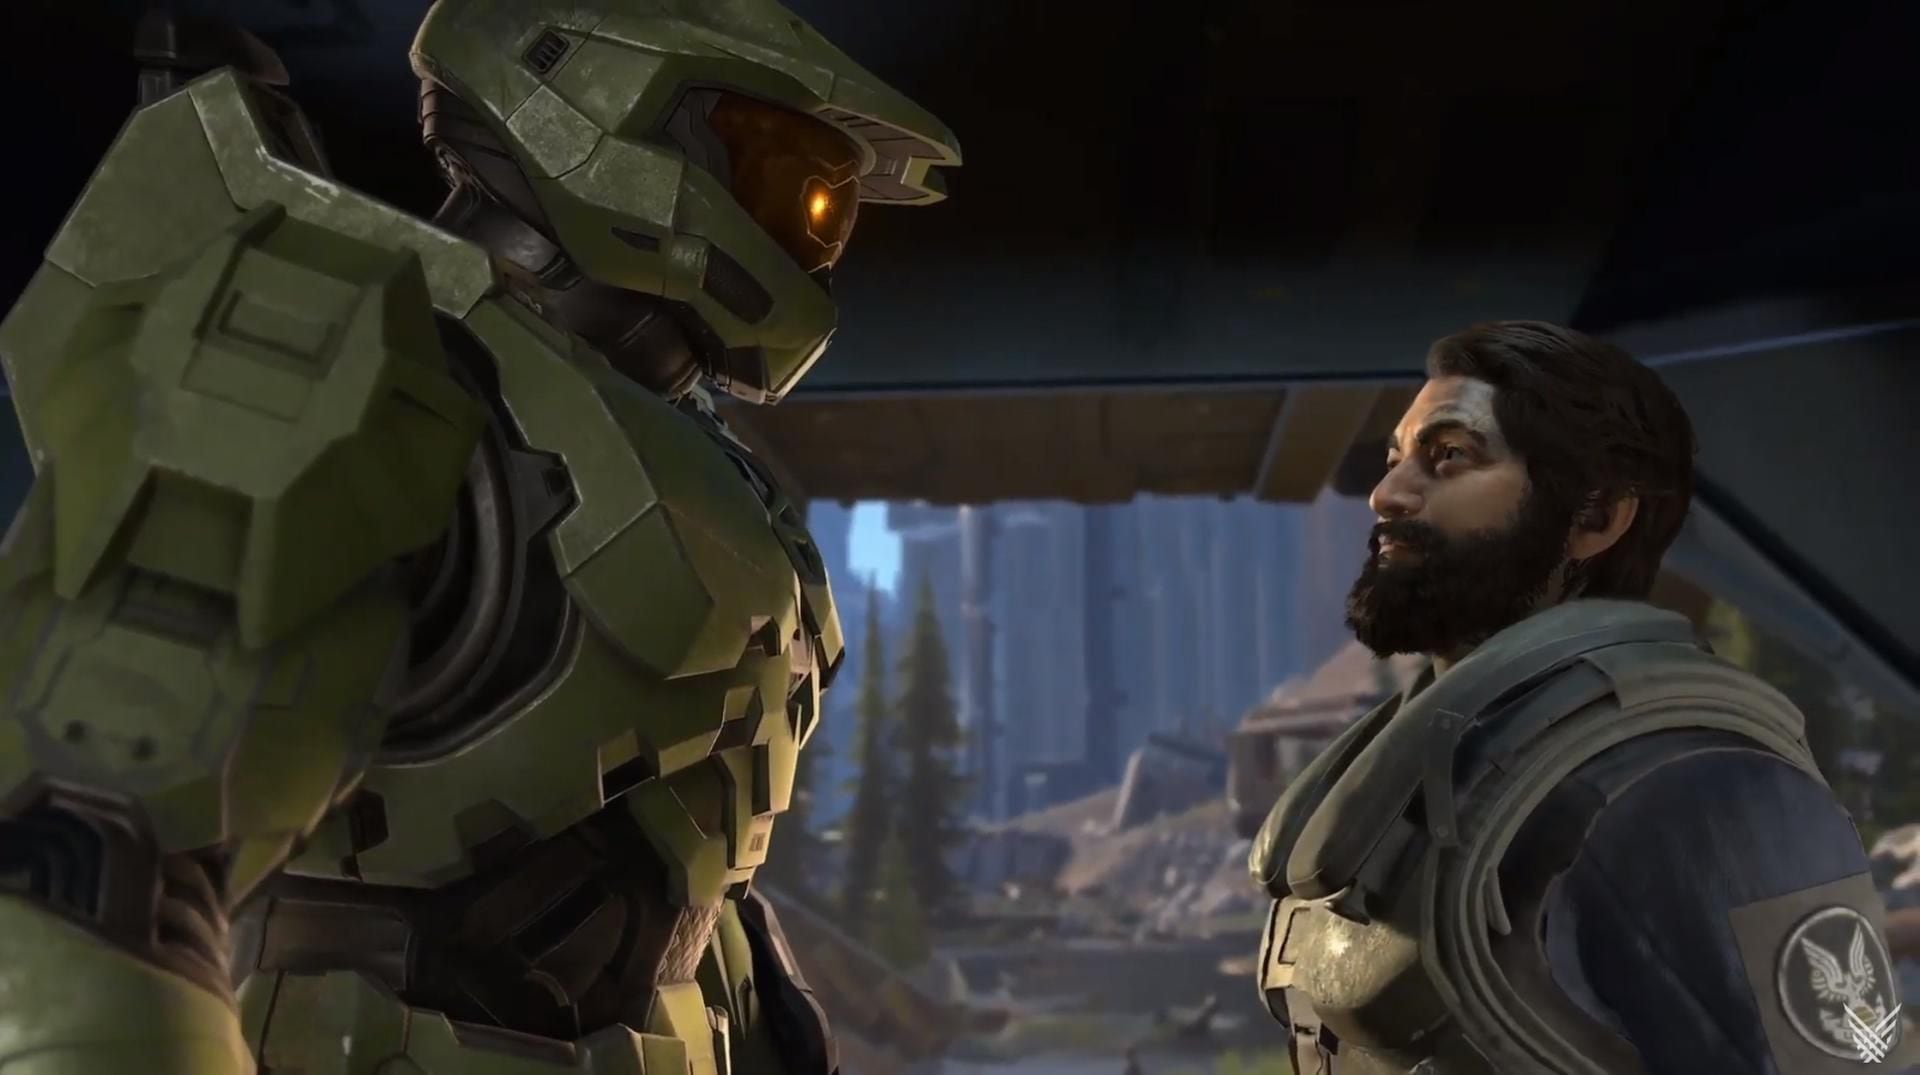 Microsoft confirms 'Halo Infinite' release date at Gamescom